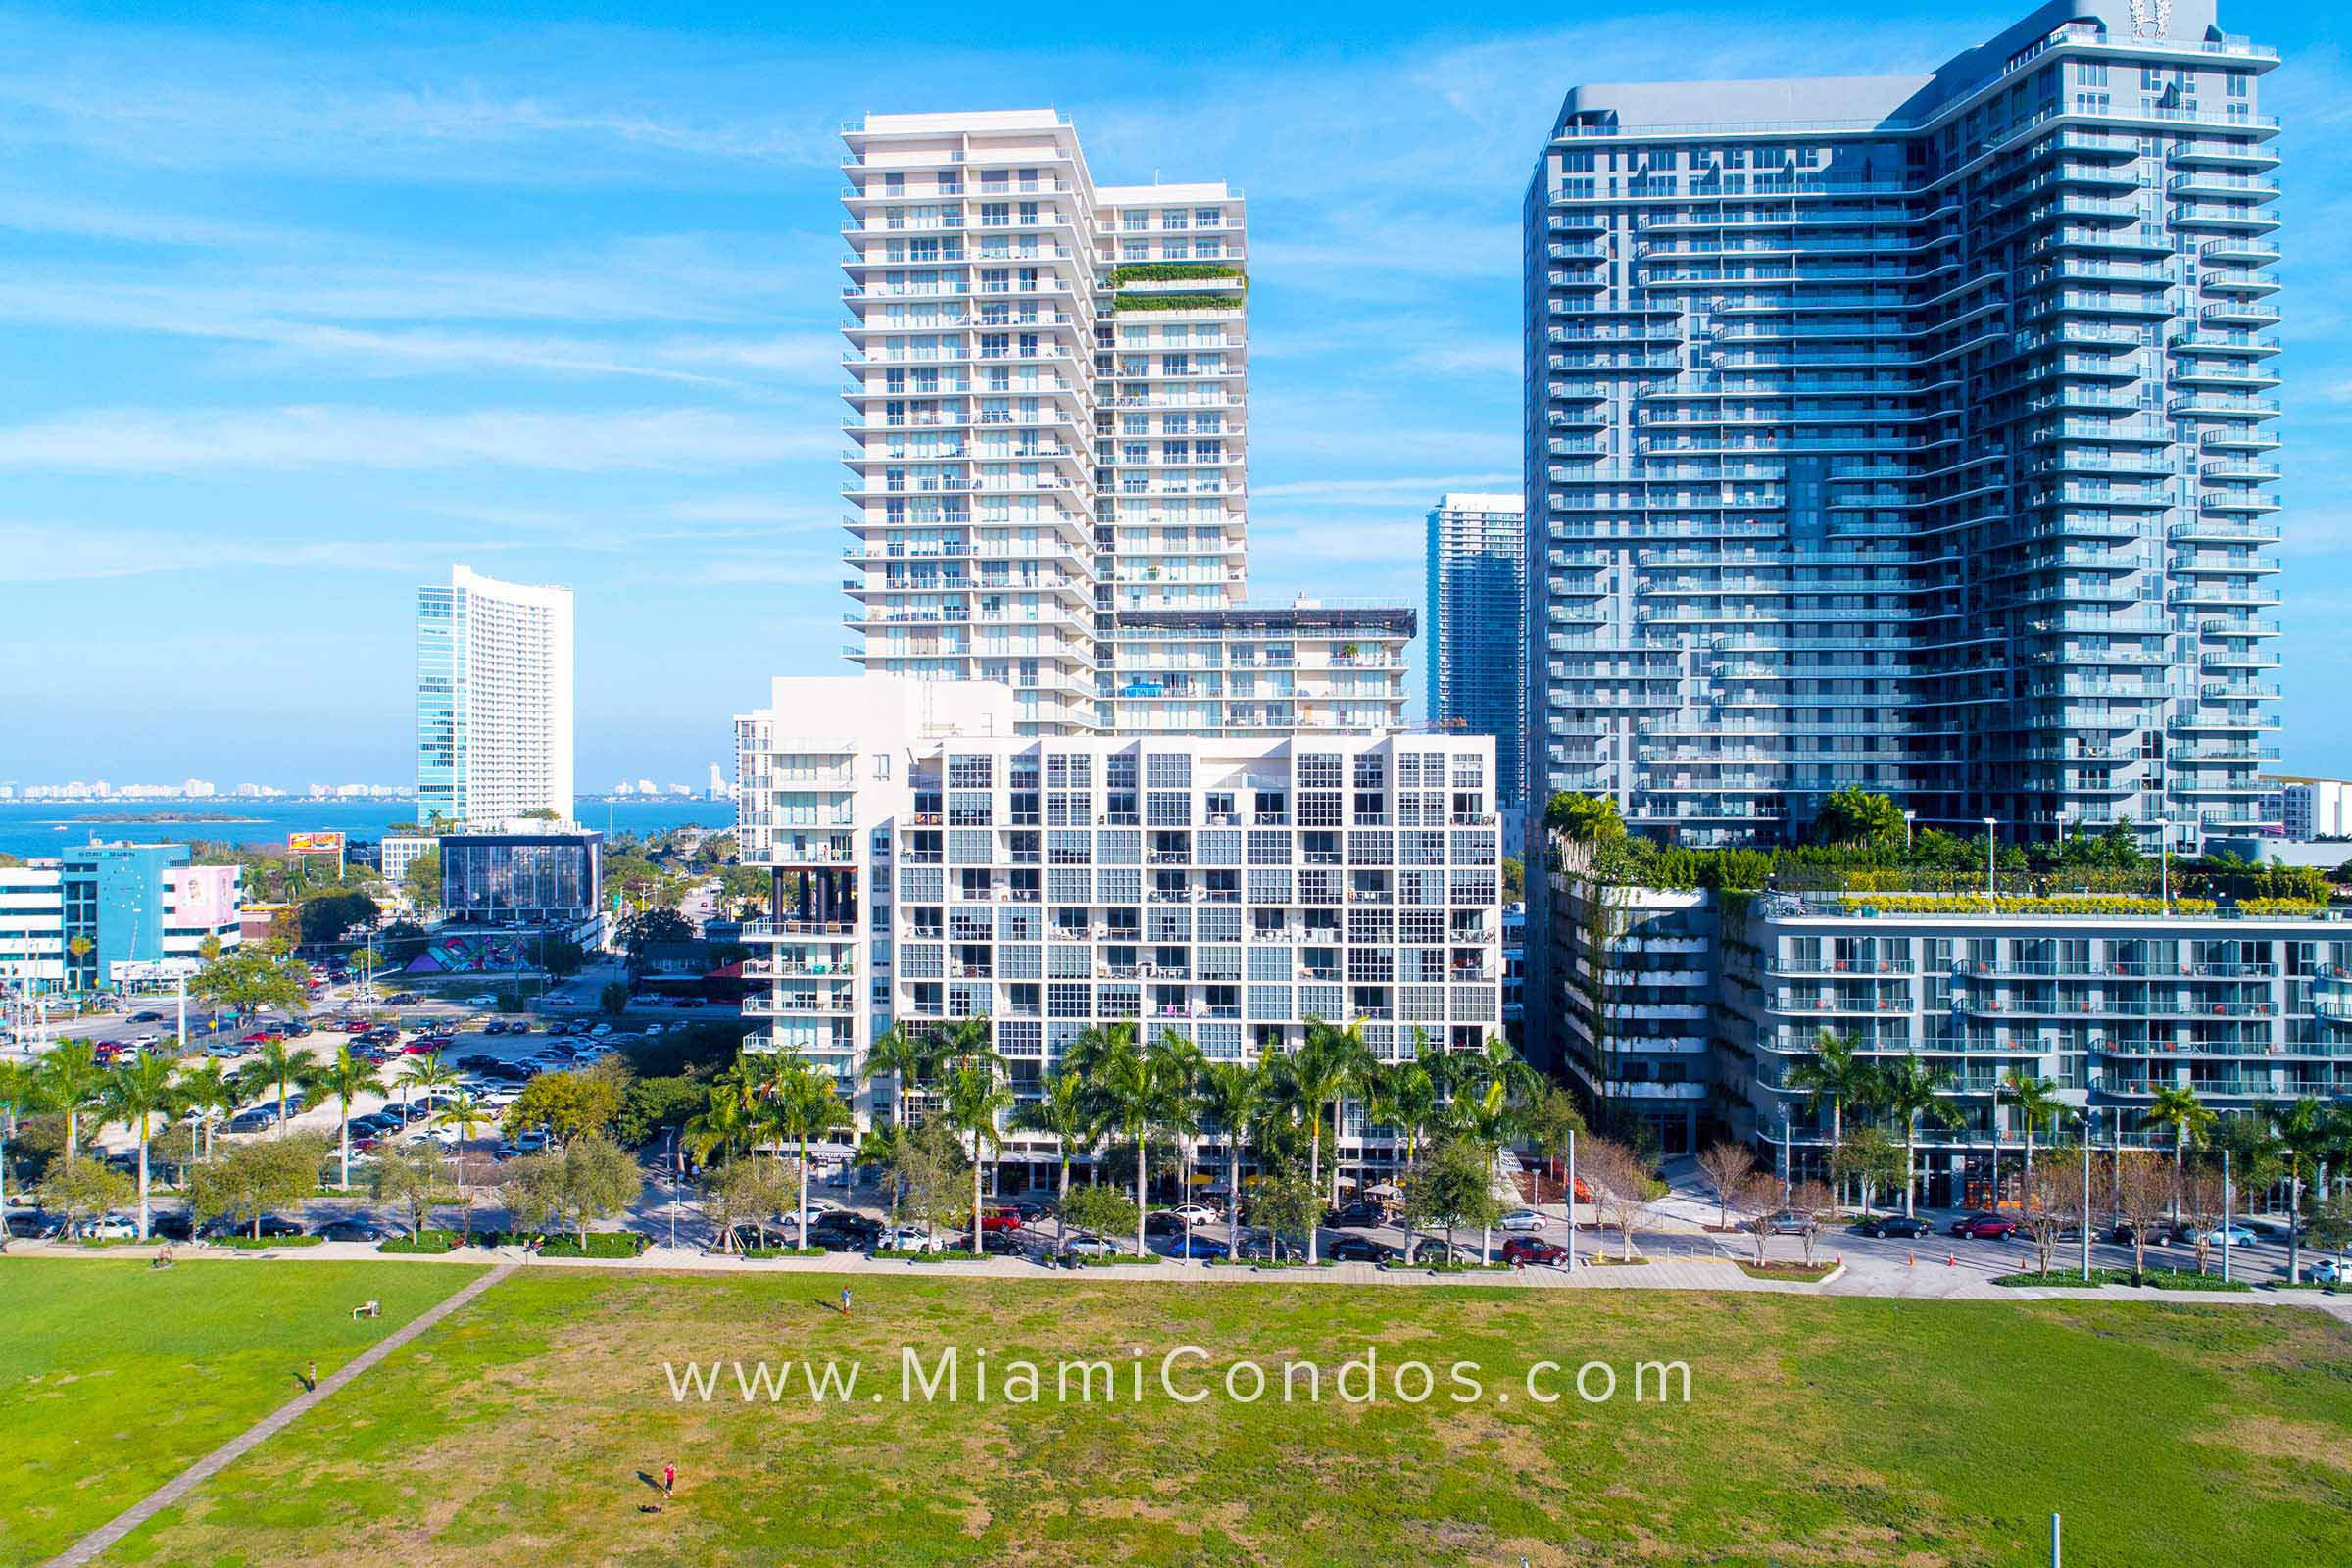 Midtown 2 in Miami